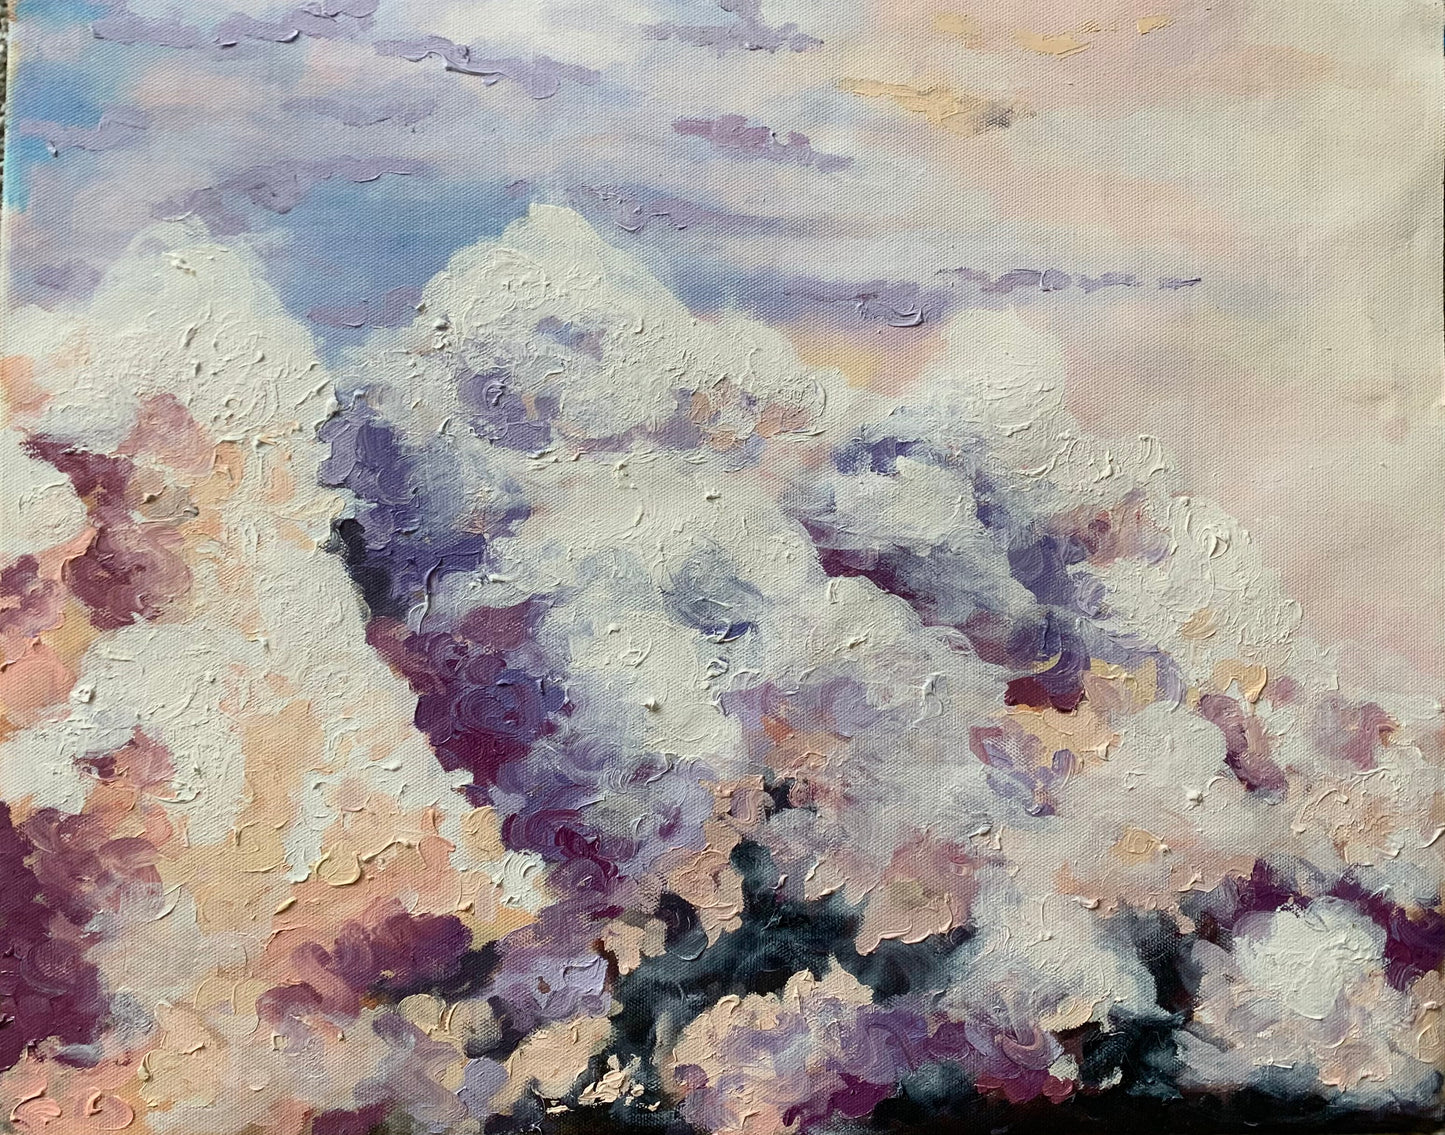 Cloud Painting (original) 16x20, oil on canvas sheet